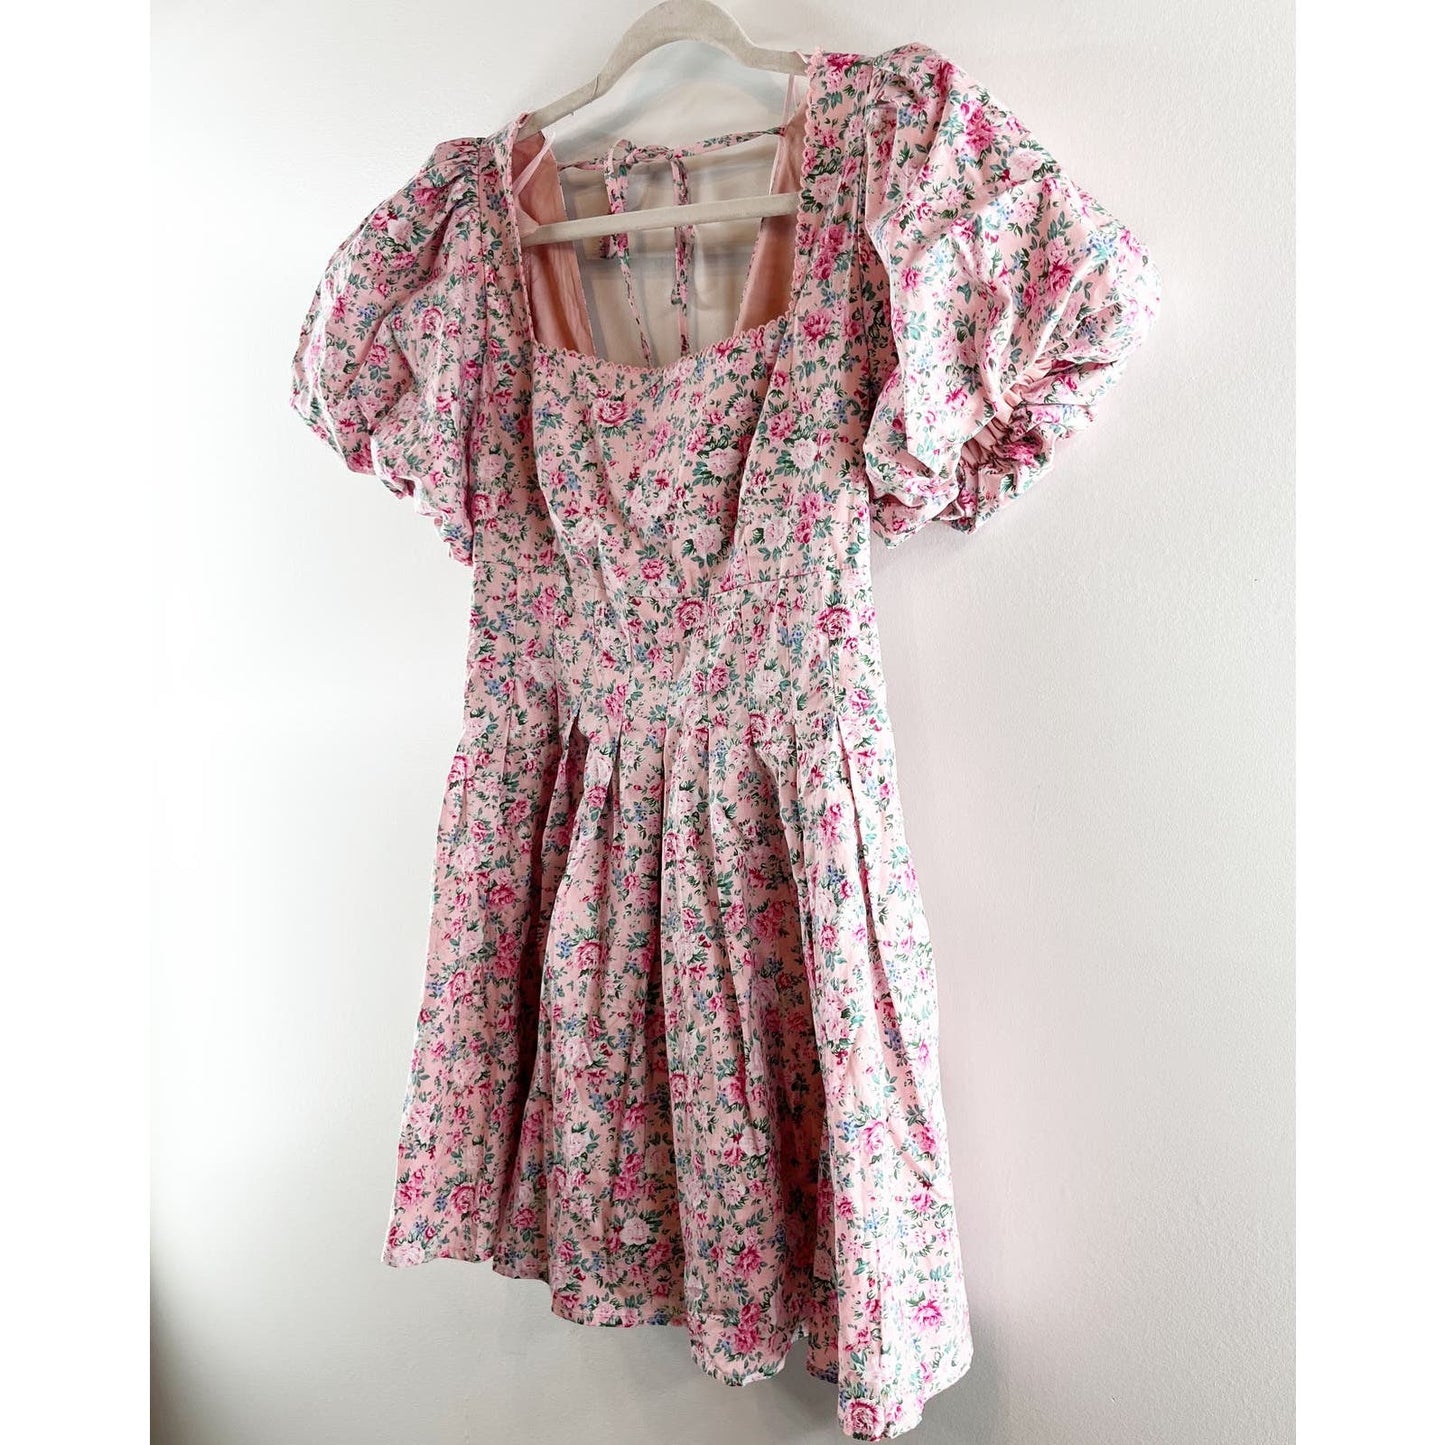 Mable Squareneck Puff Sleeve Floral Mini Dress Pink Medium